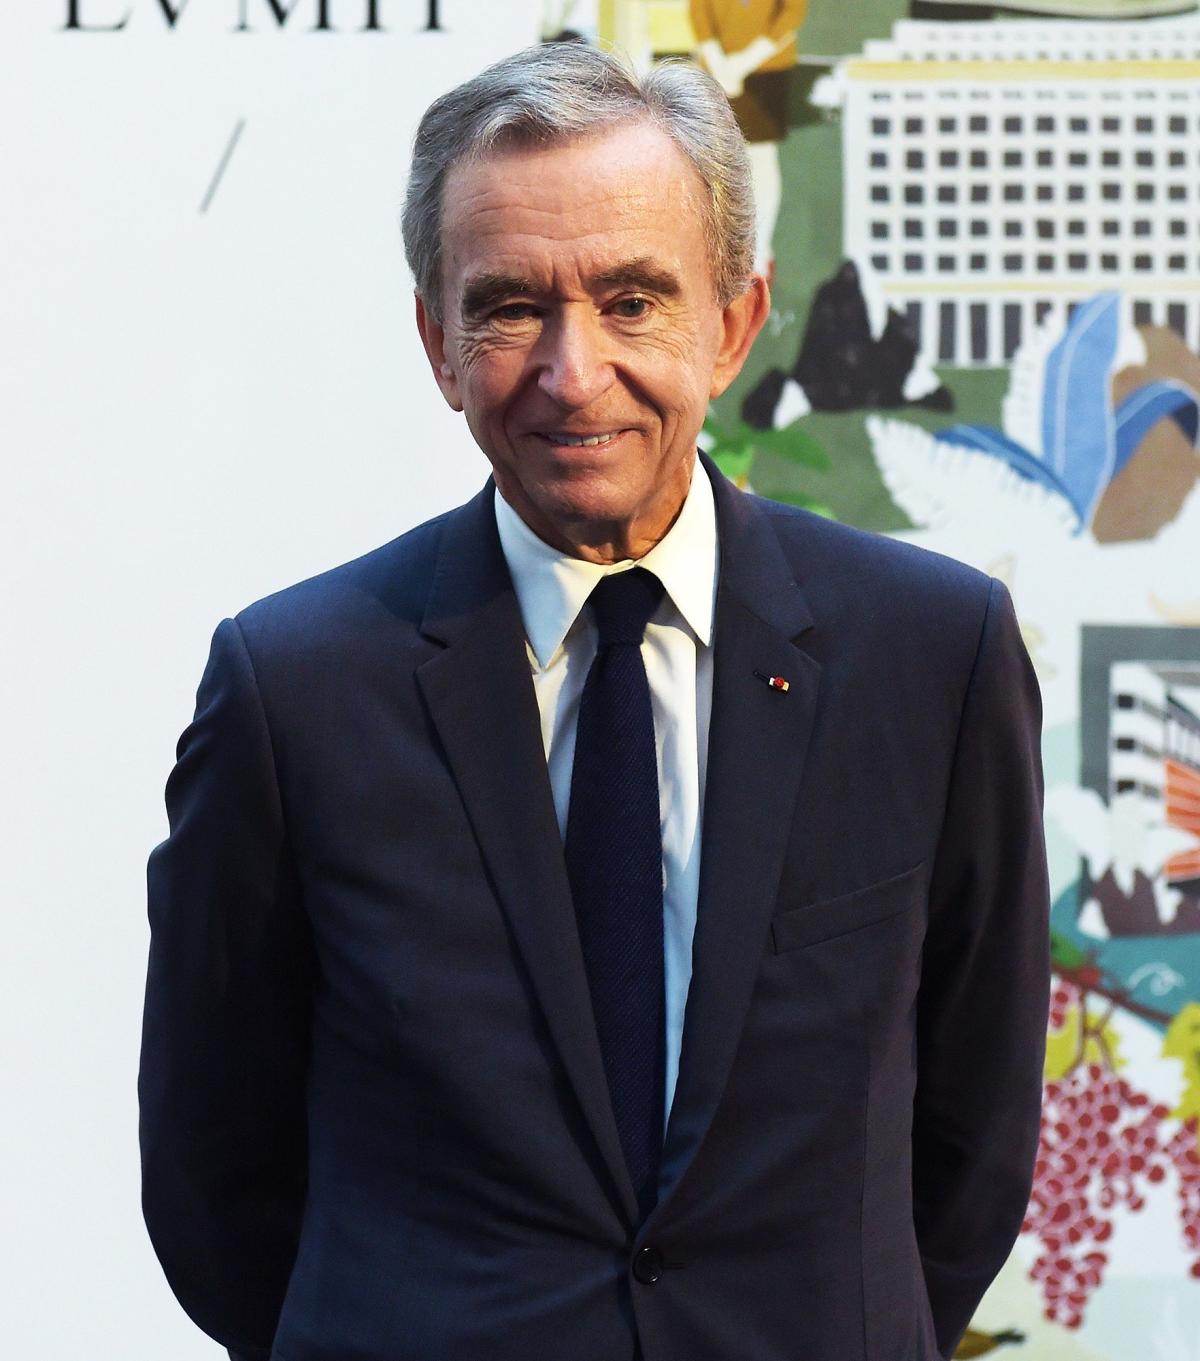 LVMH billionaire Bernard Arnault will donate €200 million to